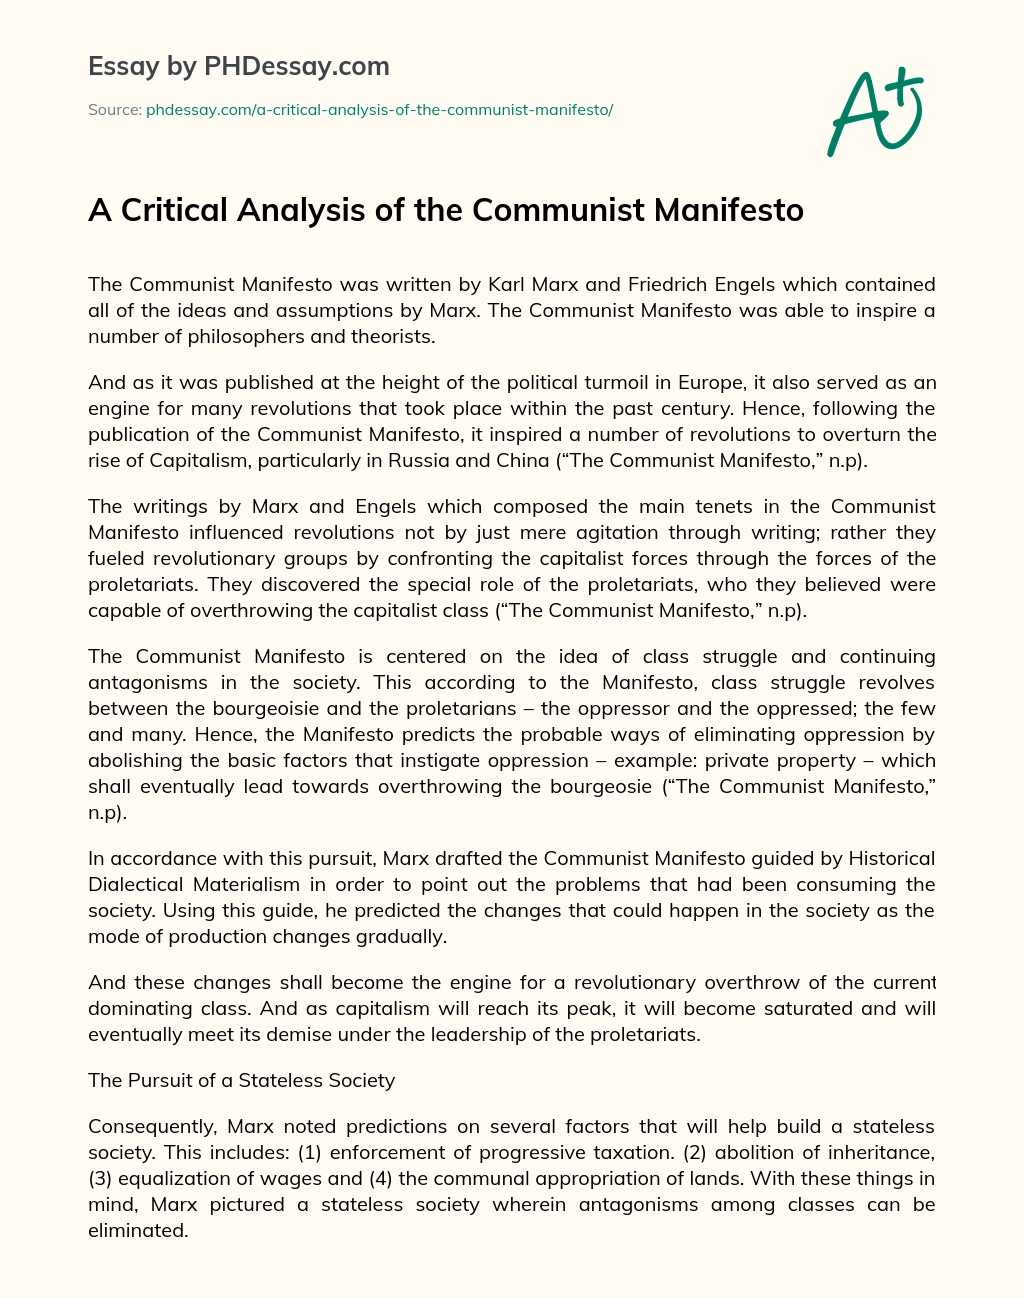 A Critical Analysis of the Communist Manifesto essay